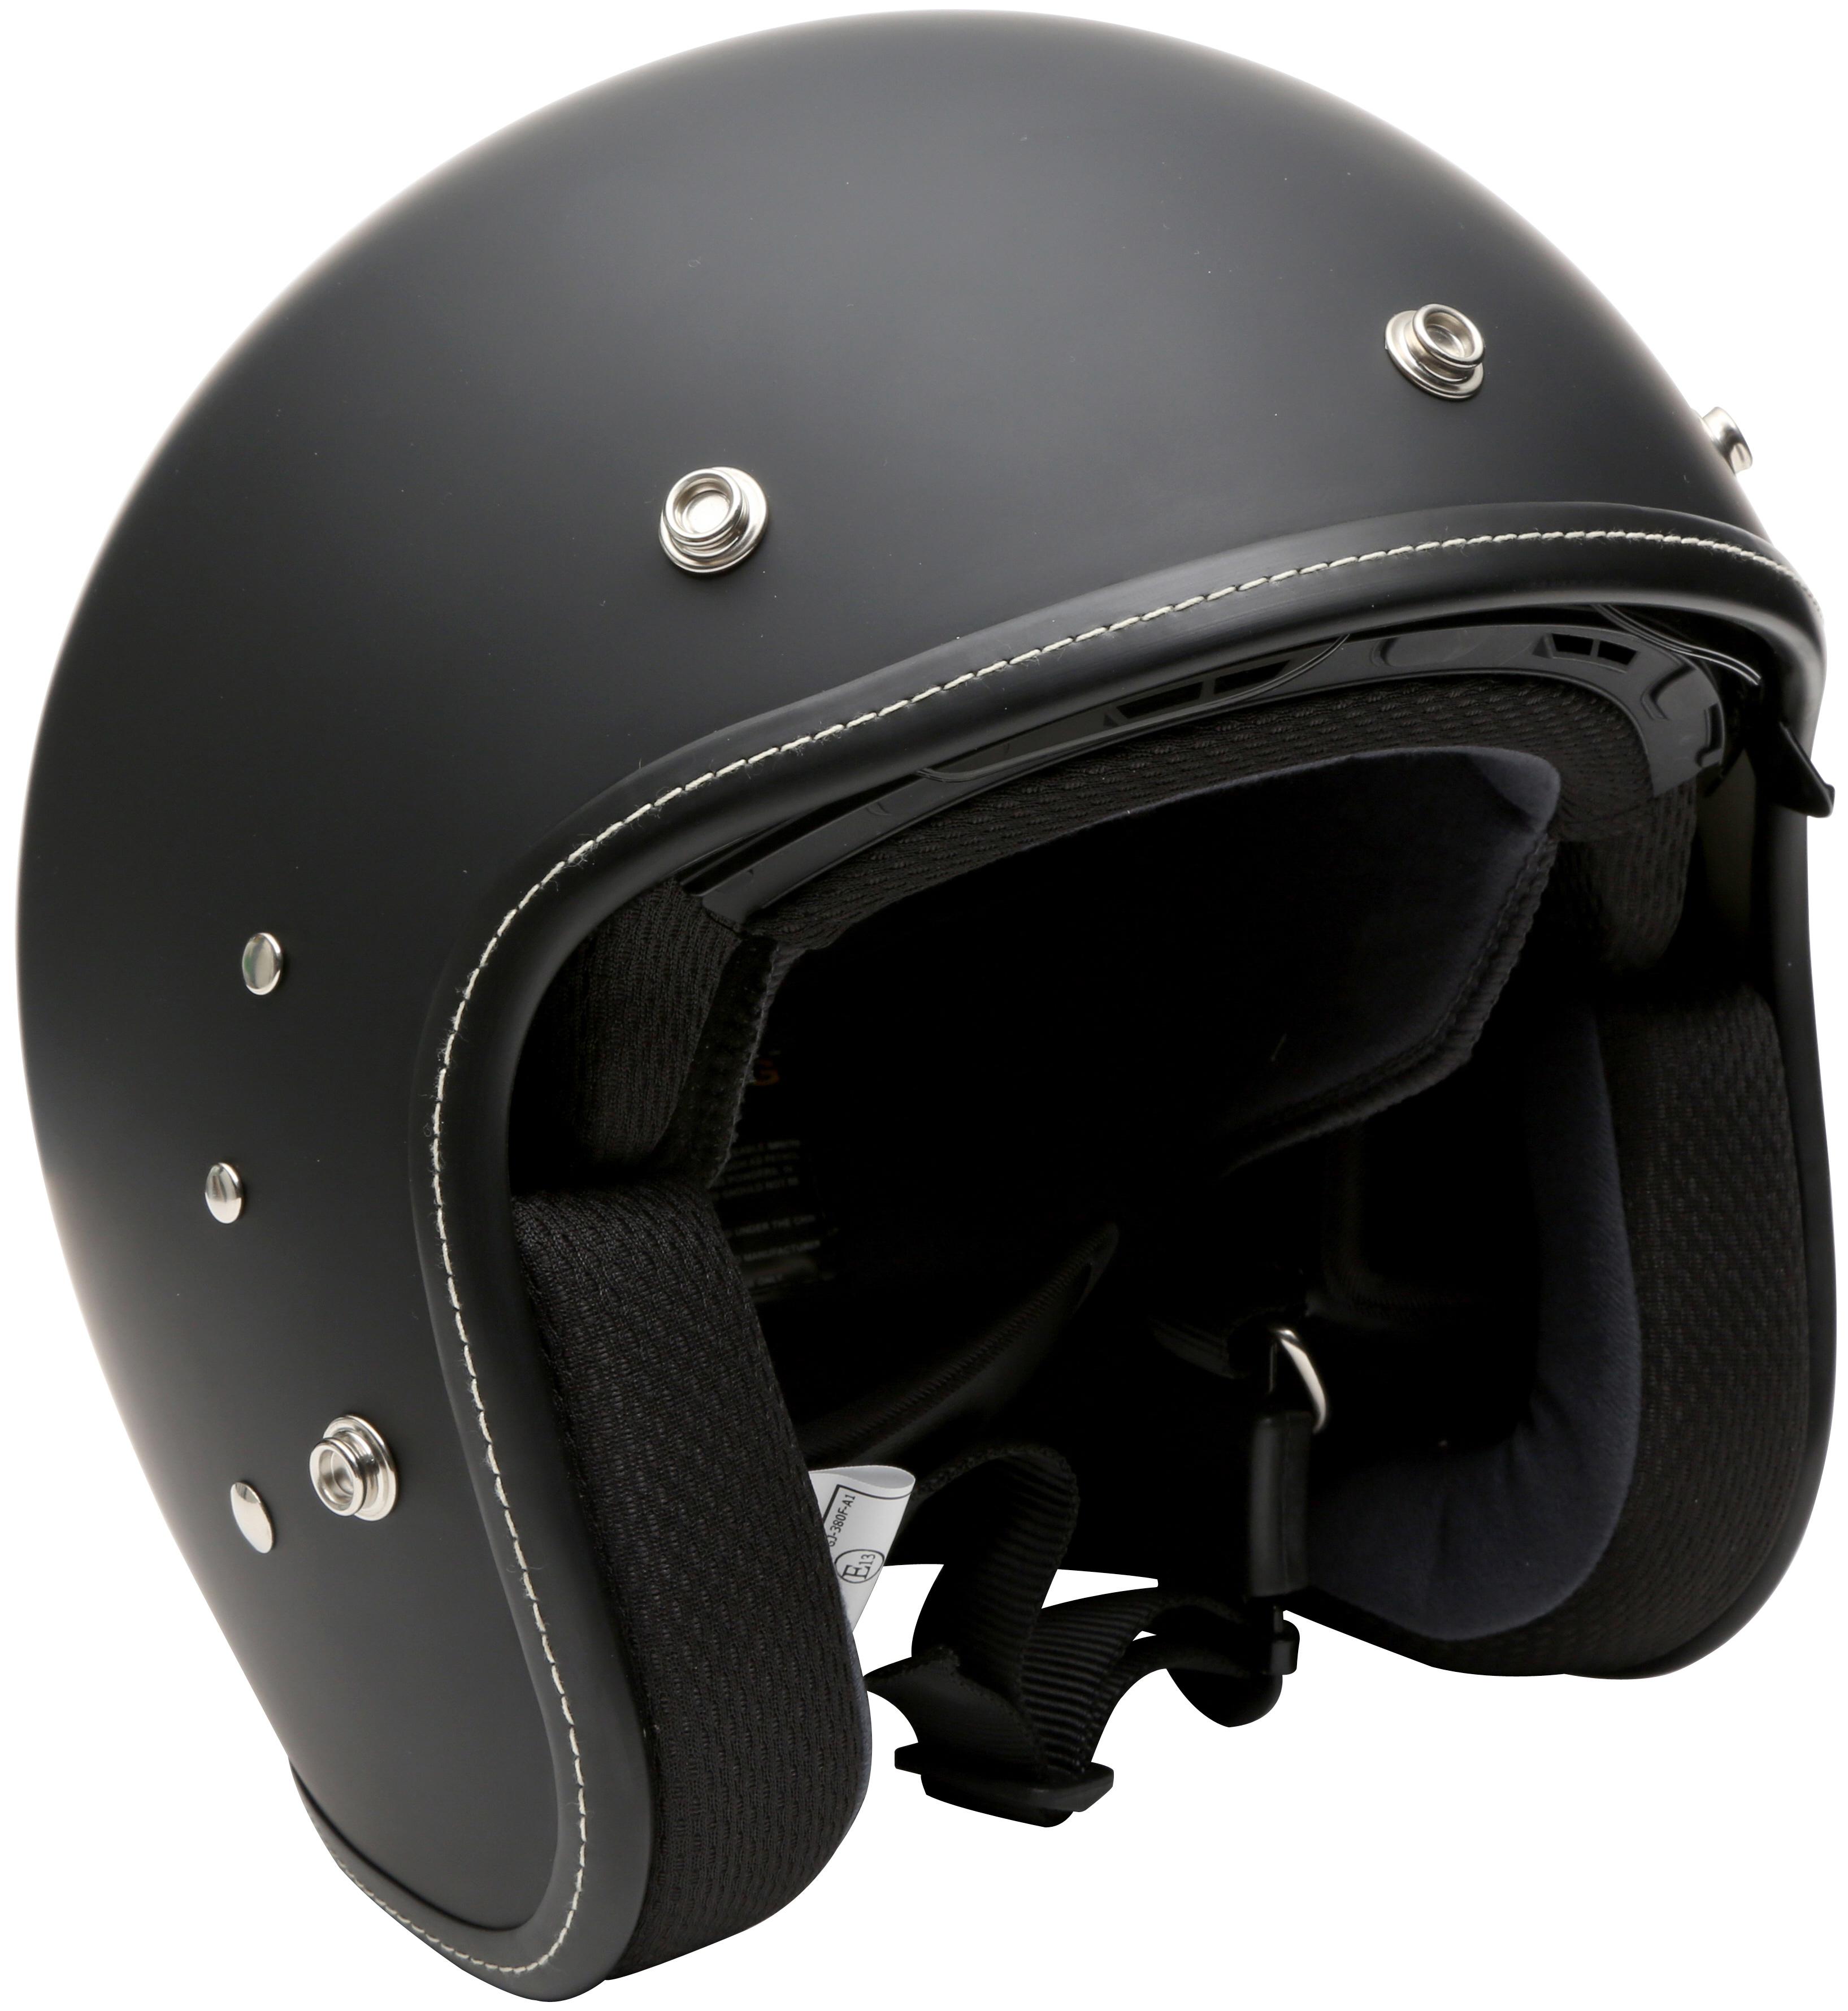 Duchinni D501 Open Face Motorcycle Helmet - Black, Large